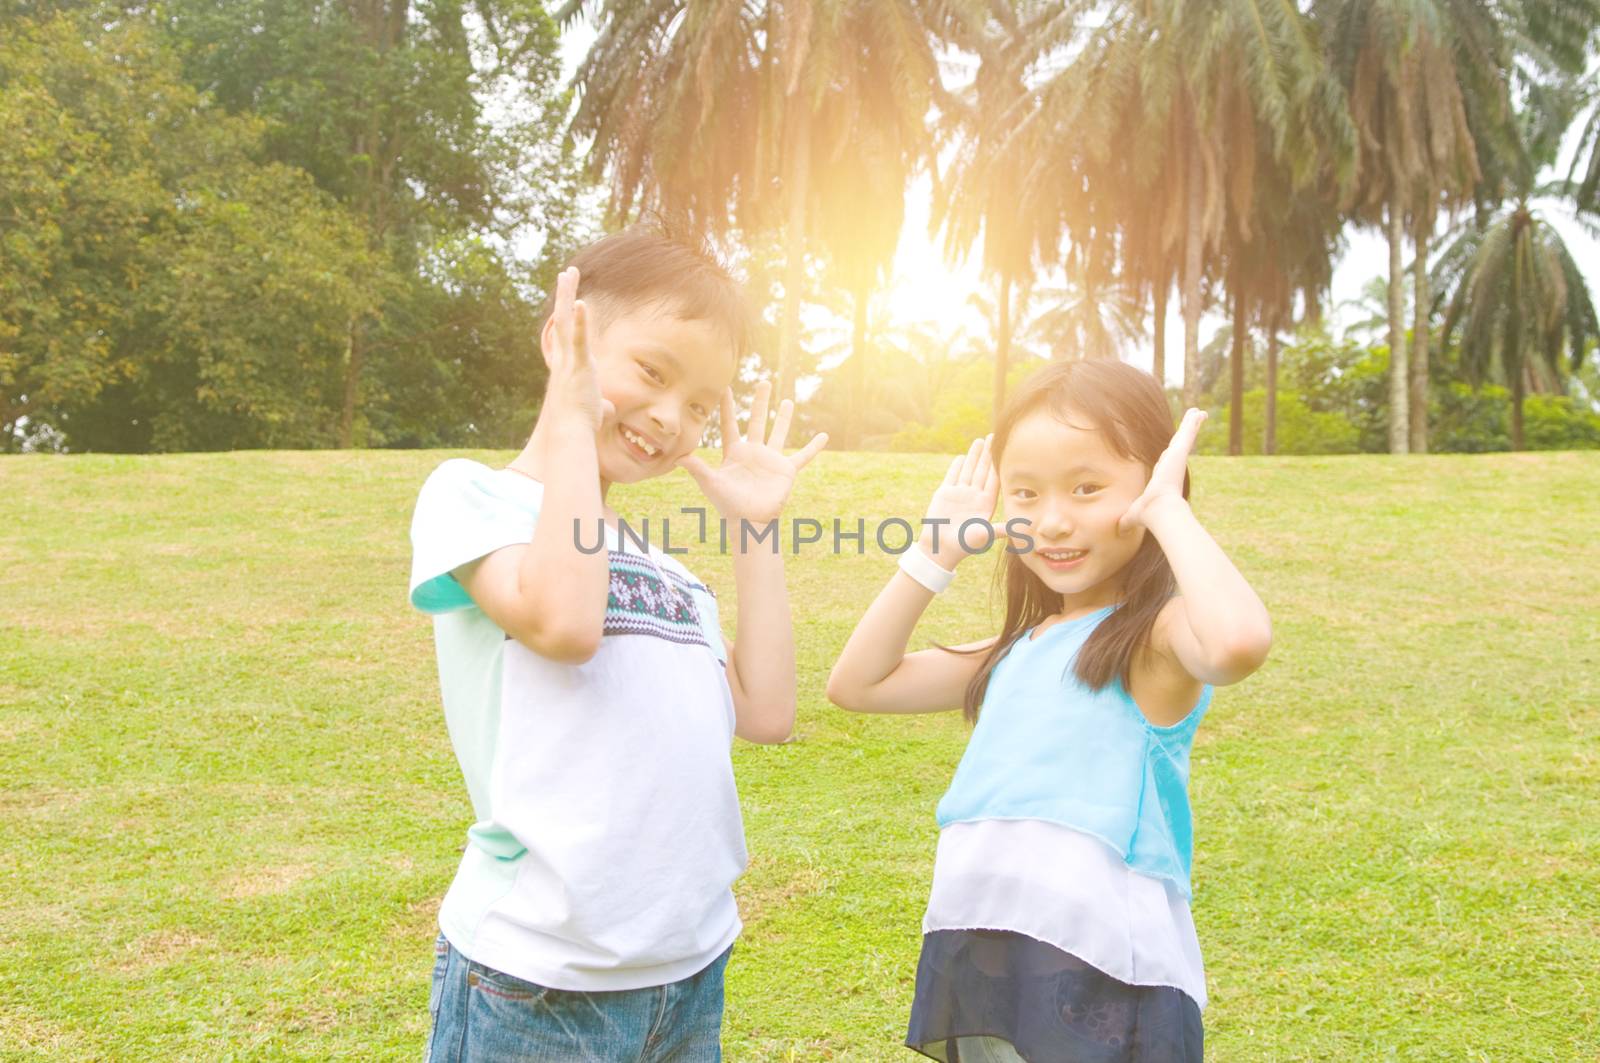 Asian children having fun at outdoor